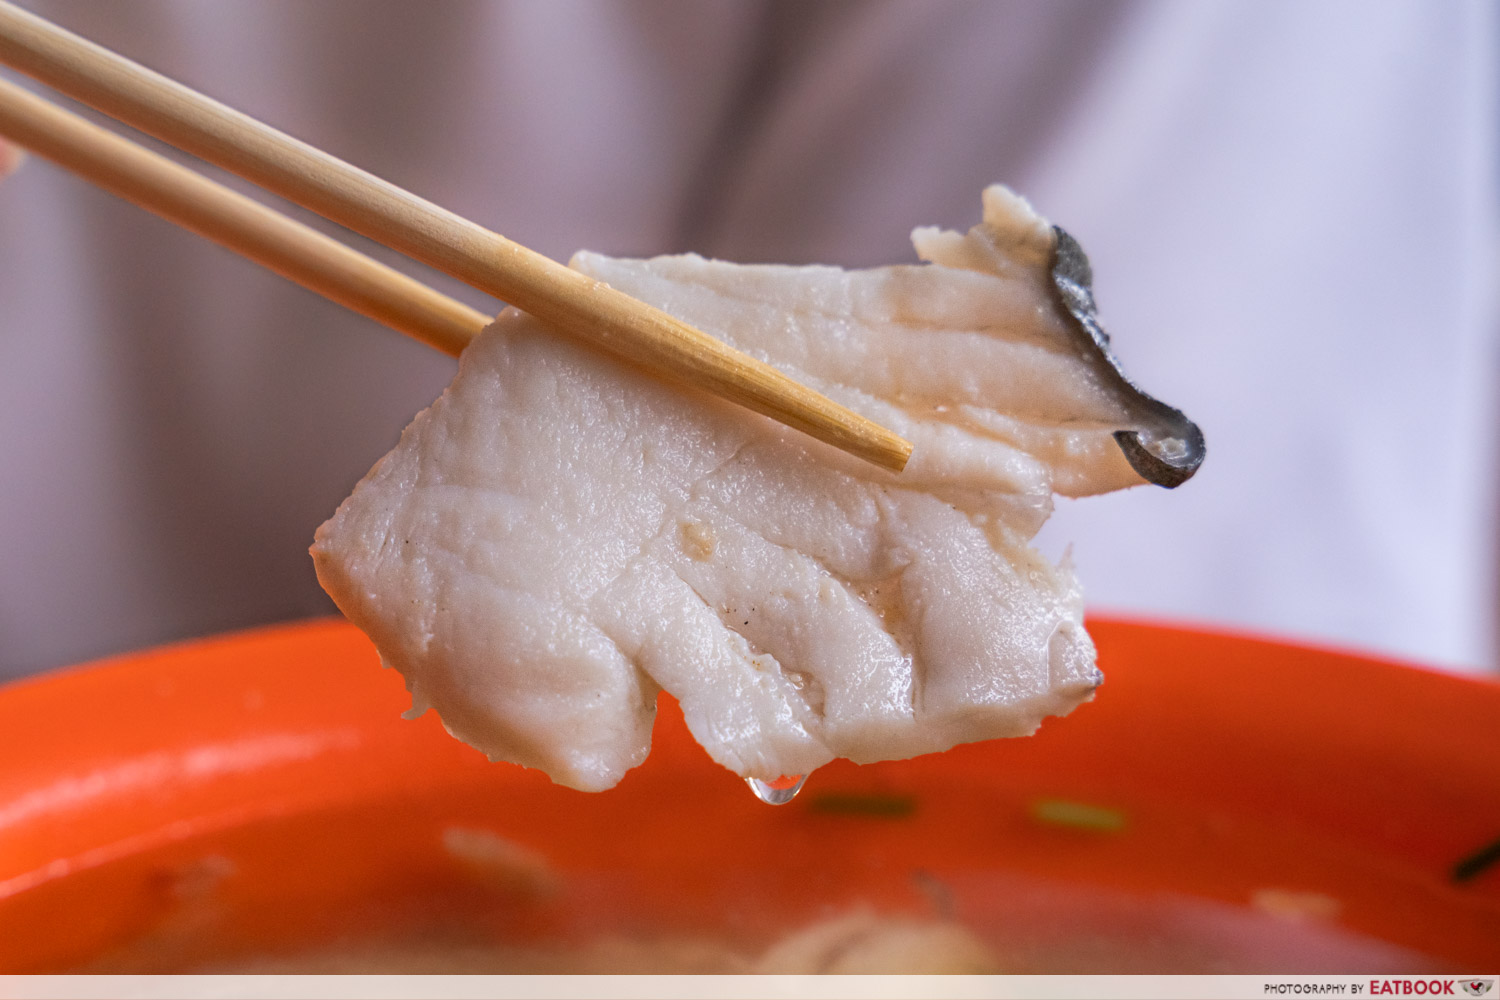 kwang-kee-teochew-fish-porridge-fish-slice-close-up